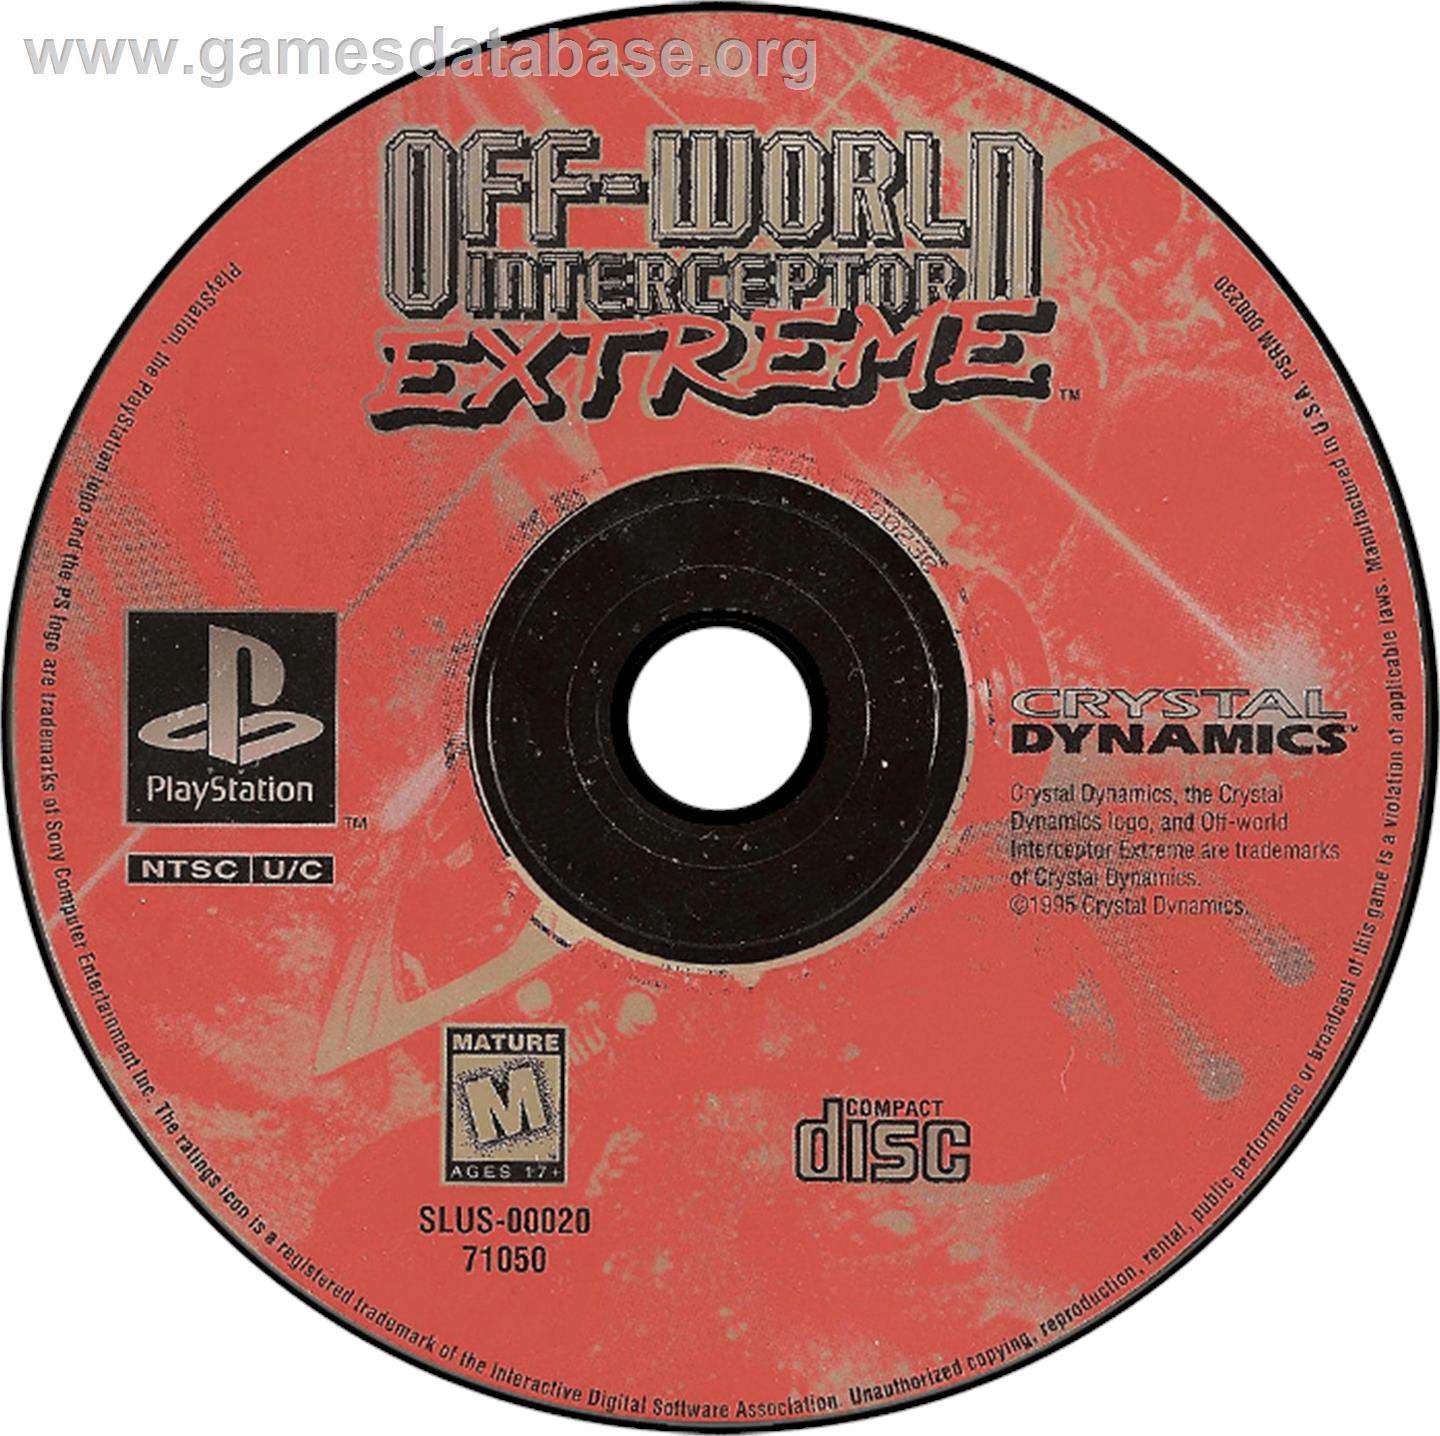 Off-World Interceptor Extreme - Sony Playstation - Artwork - Disc